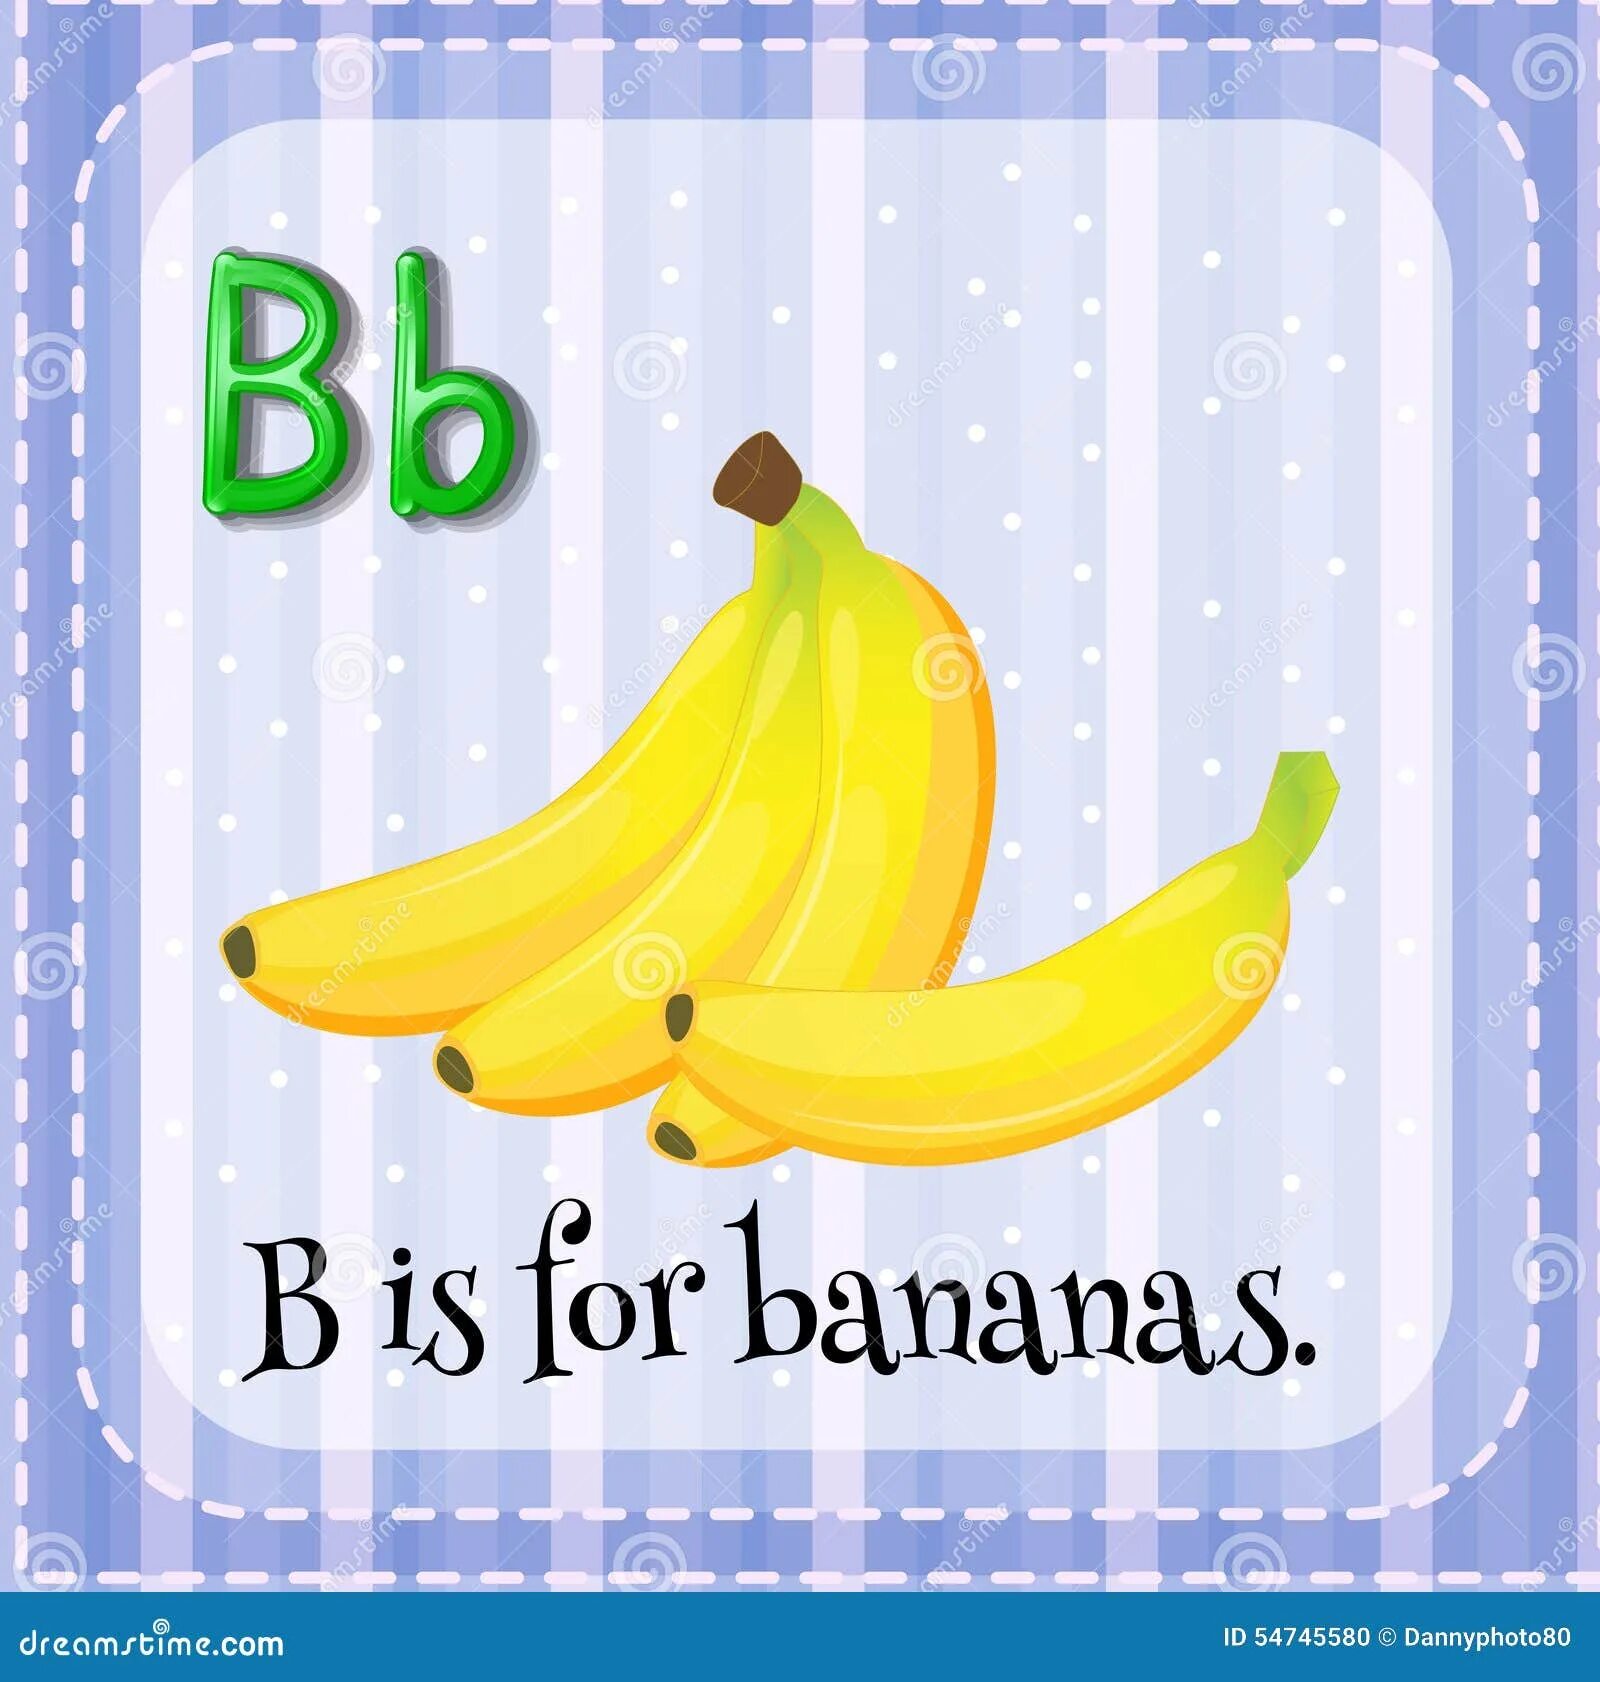 Как будет по английски банан. Карточка банан. Letter b банан. Банан по английскому. Бананов буква б.